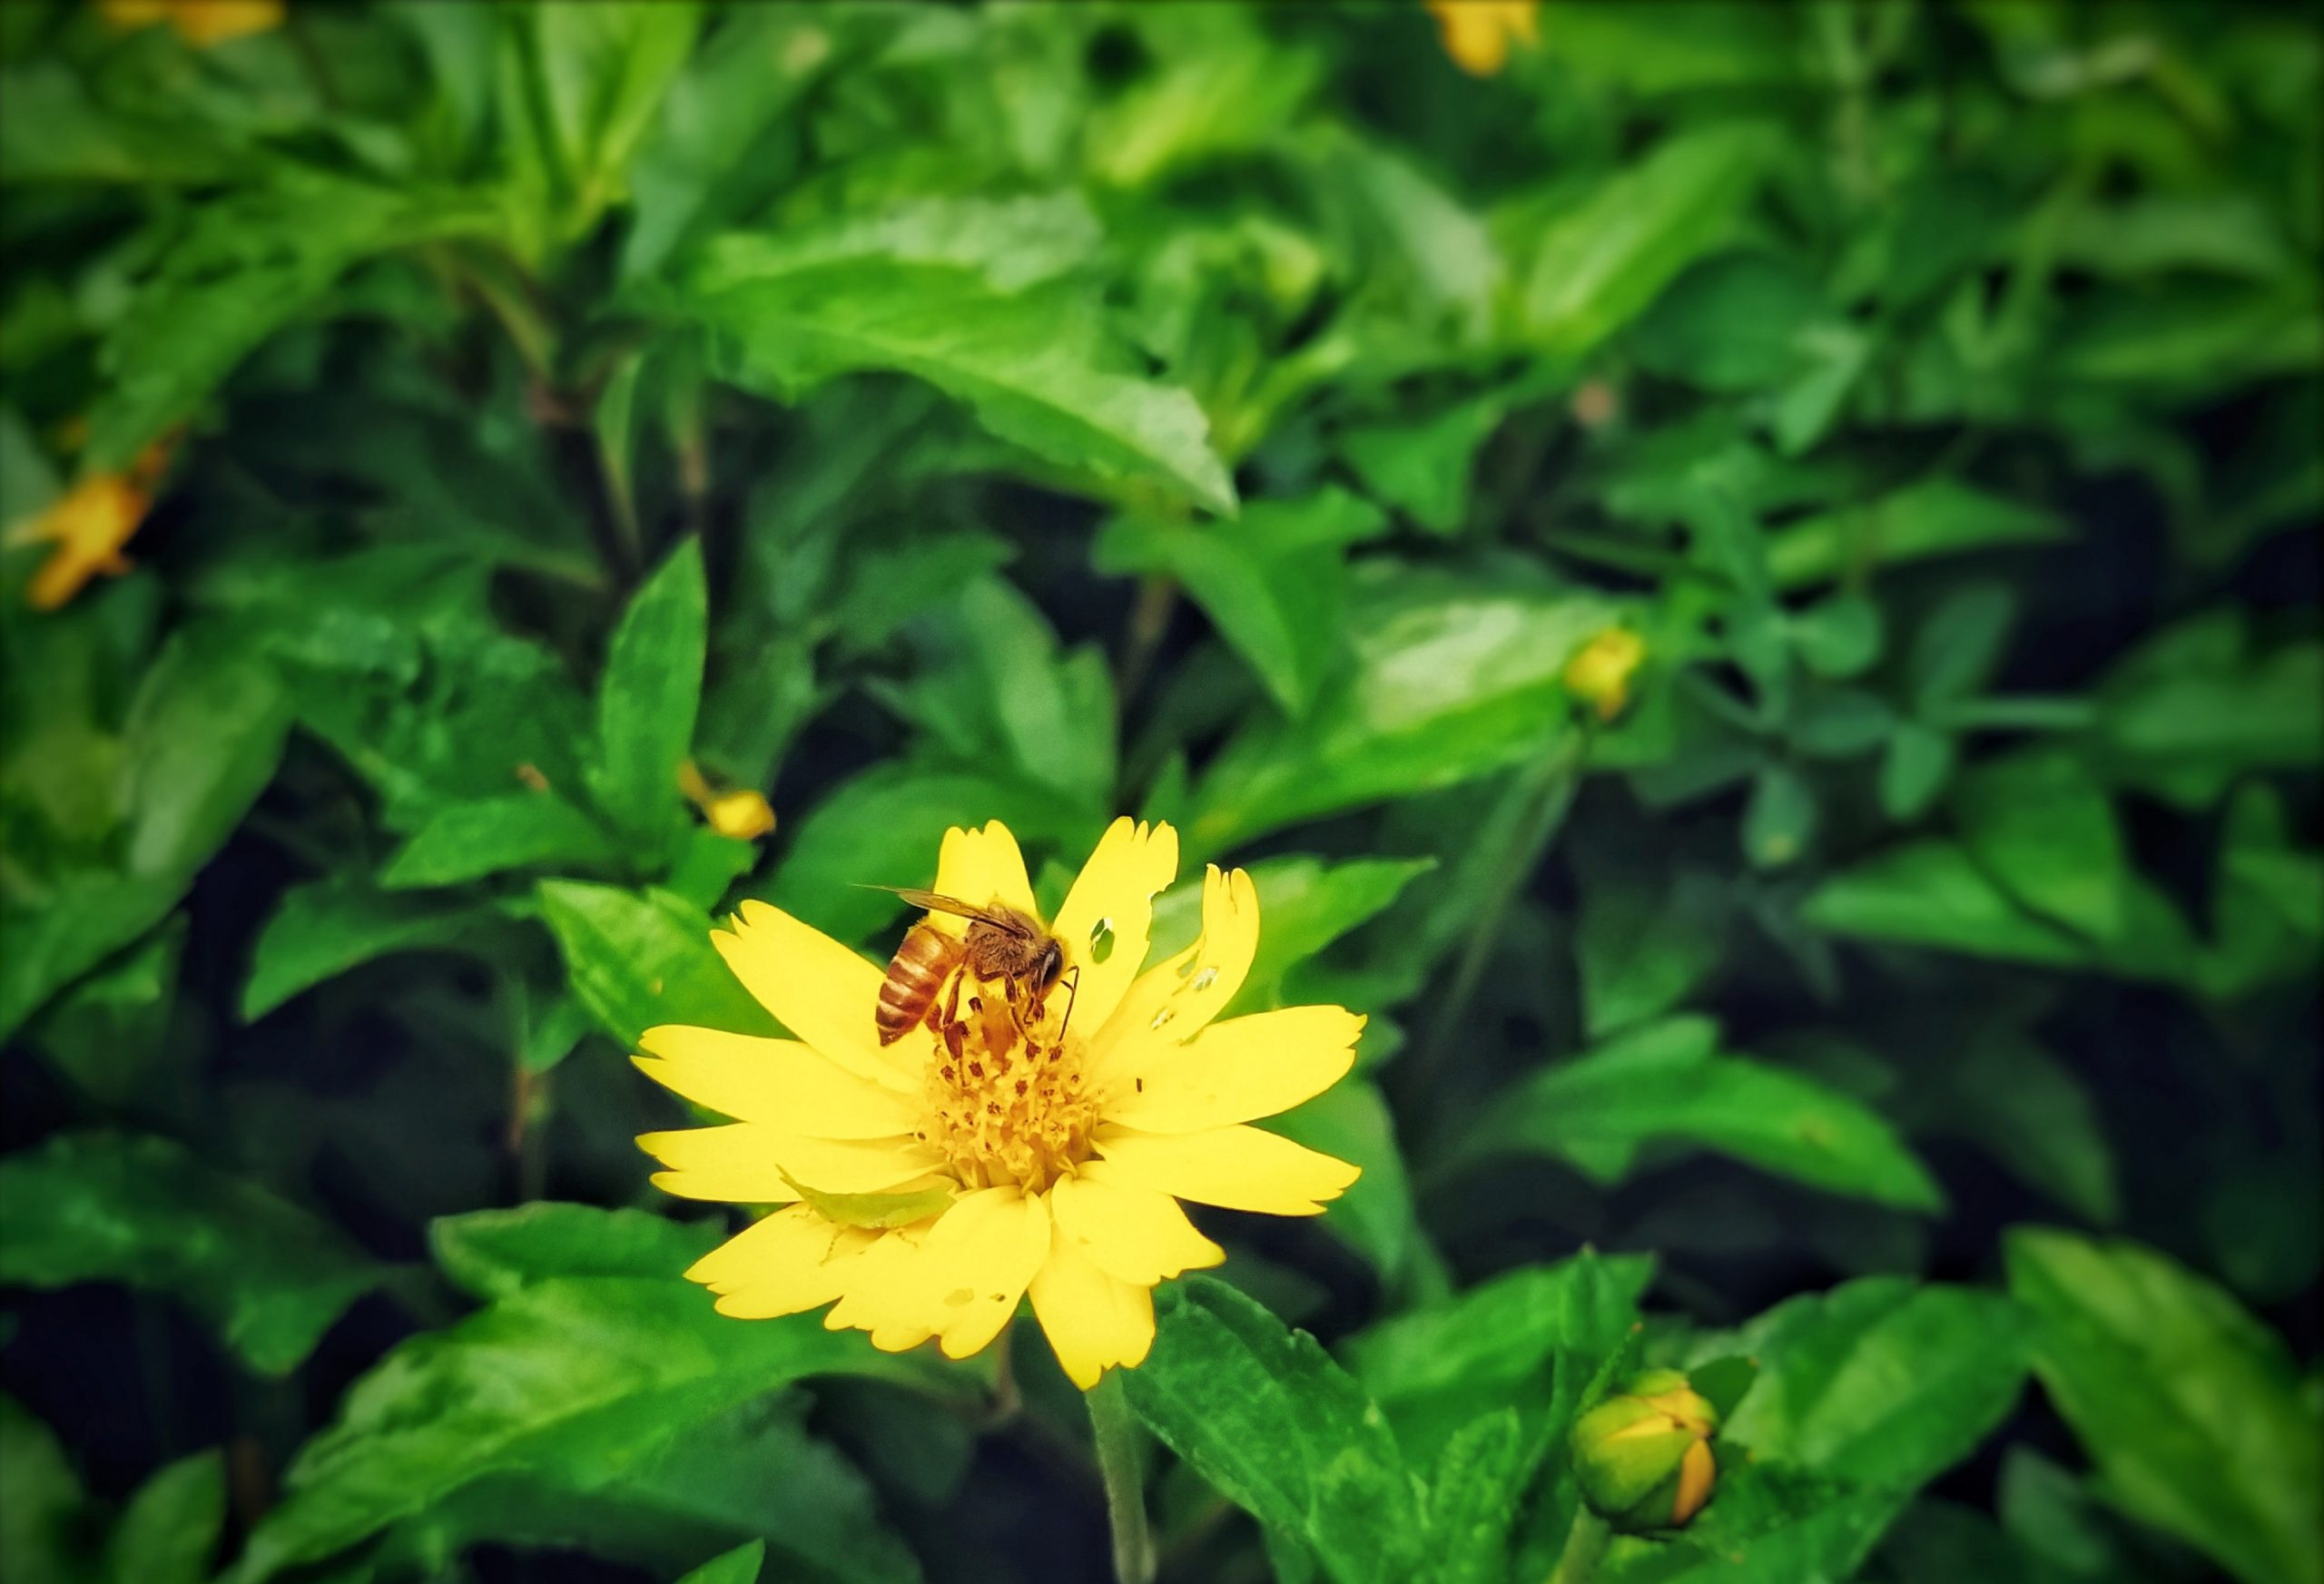 A honeybee on yellow flower